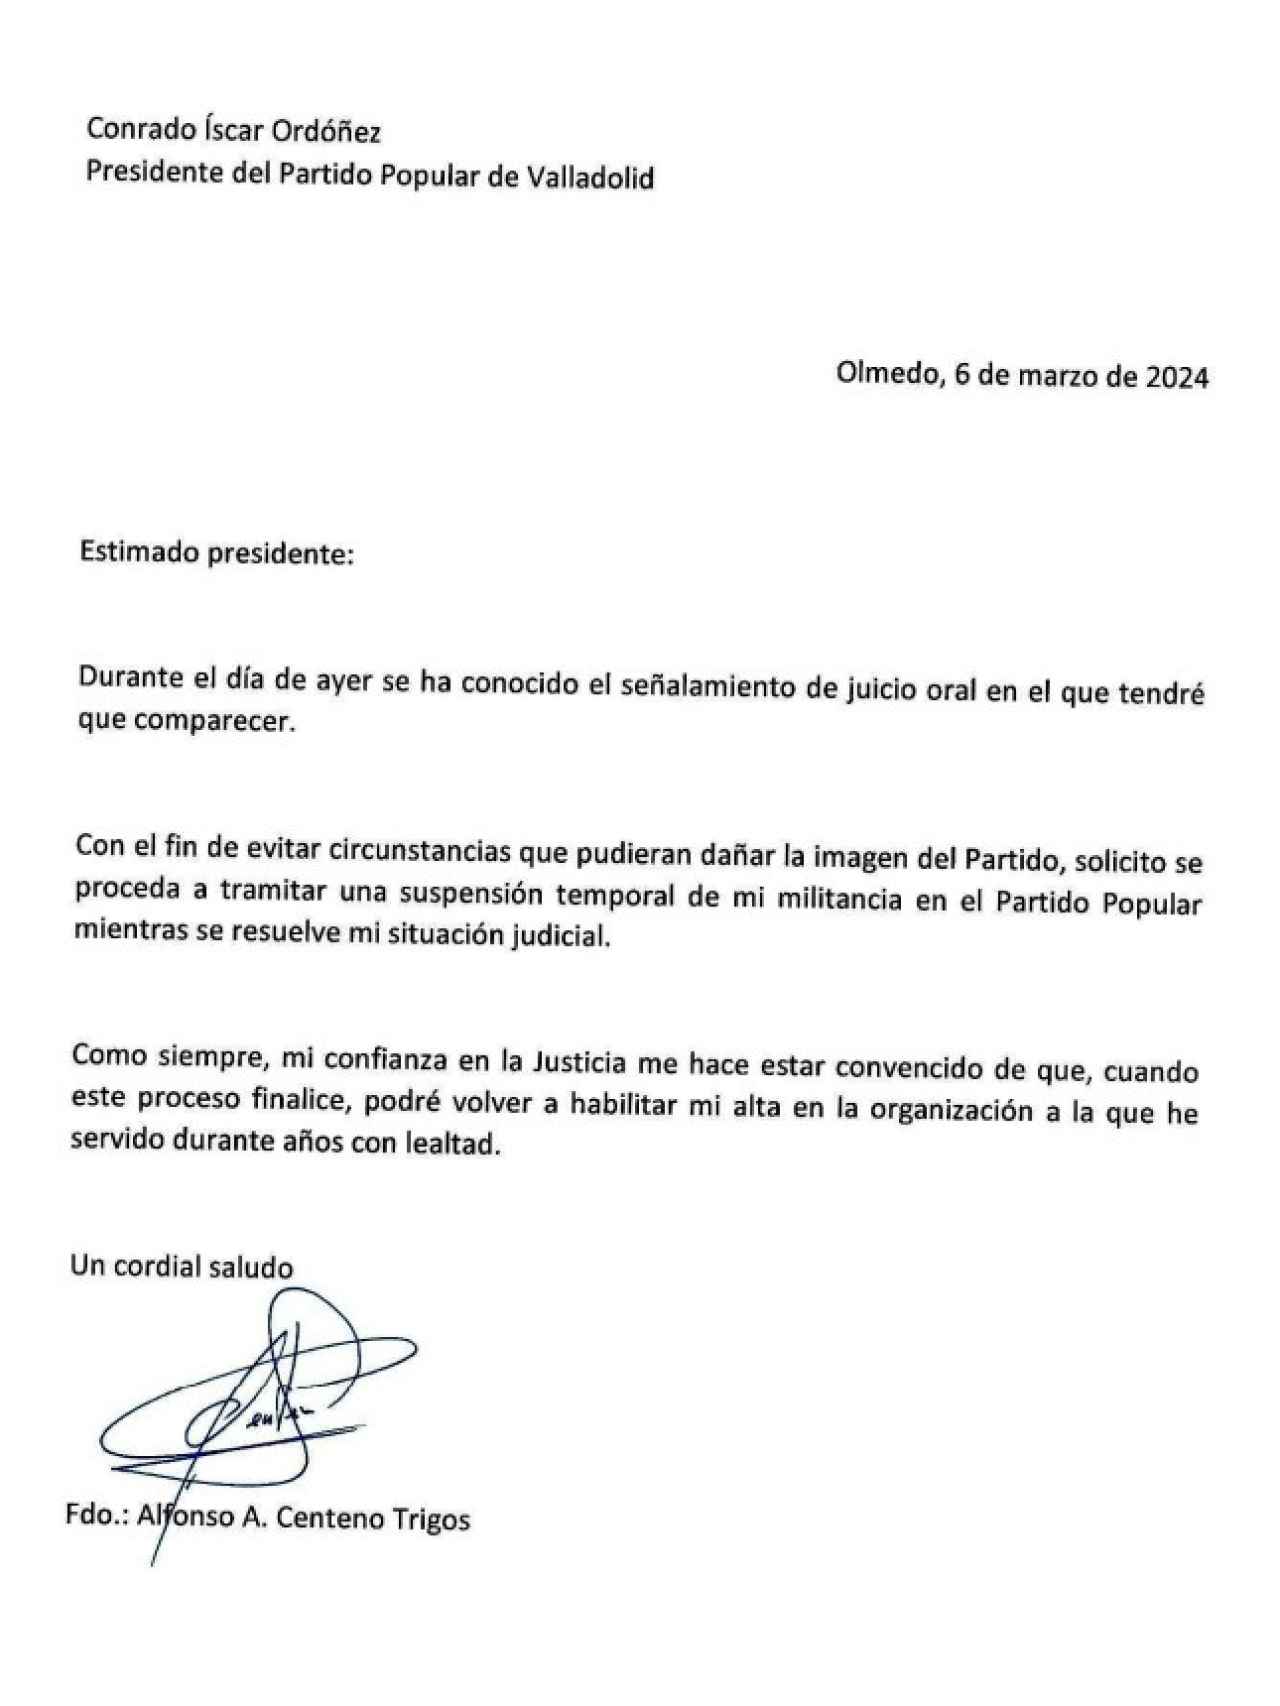 Comunicado Alfonso Centeno